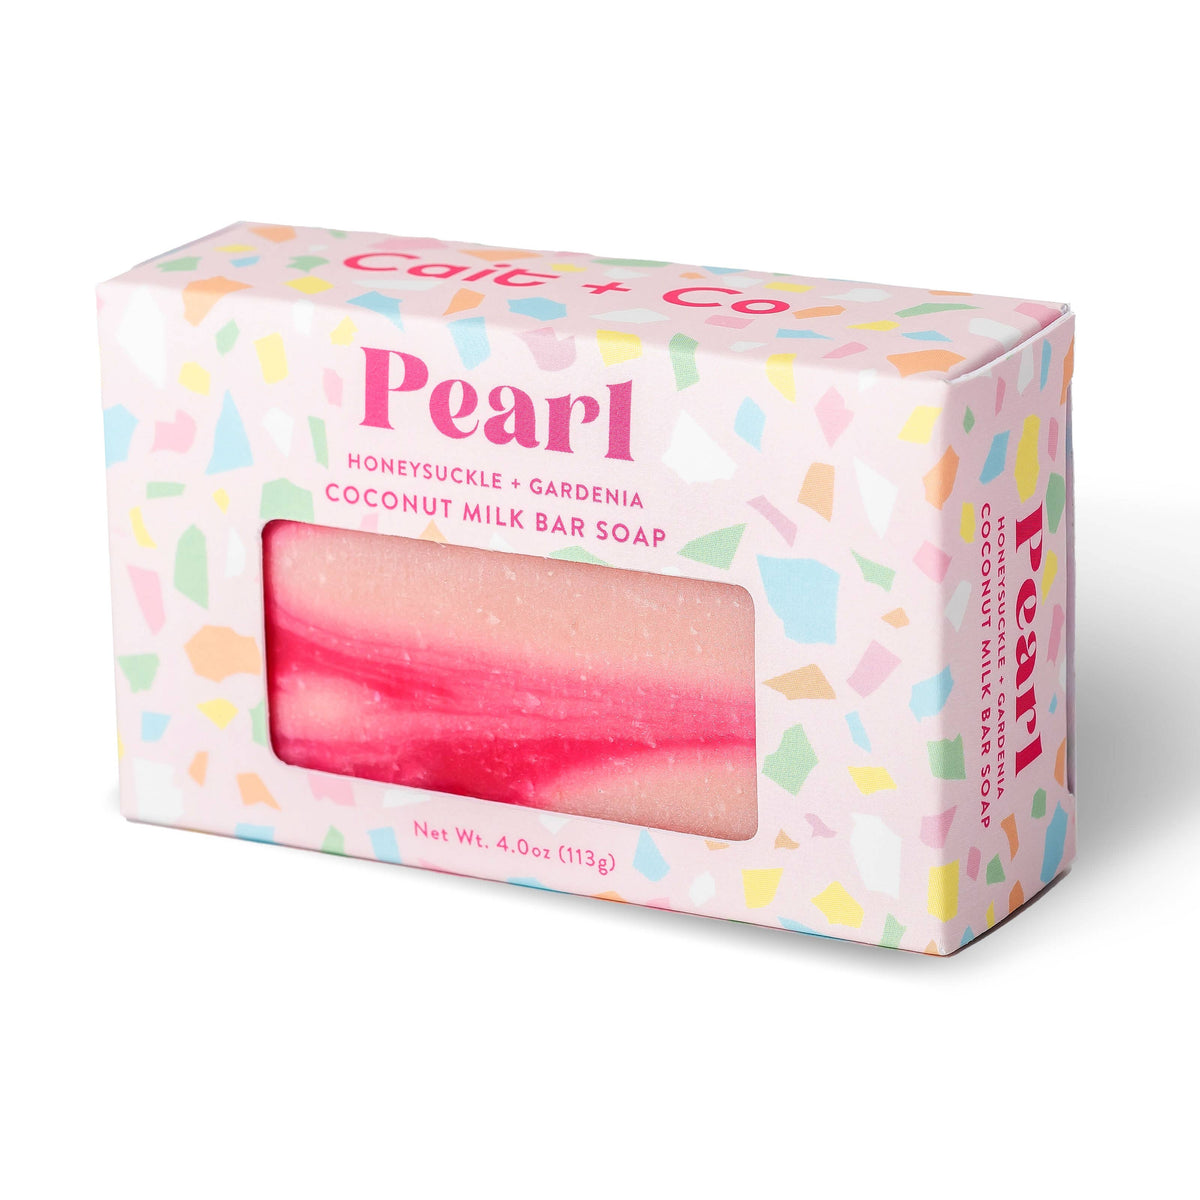 Cait & Co Pearl Coconut Milk Bar Soap